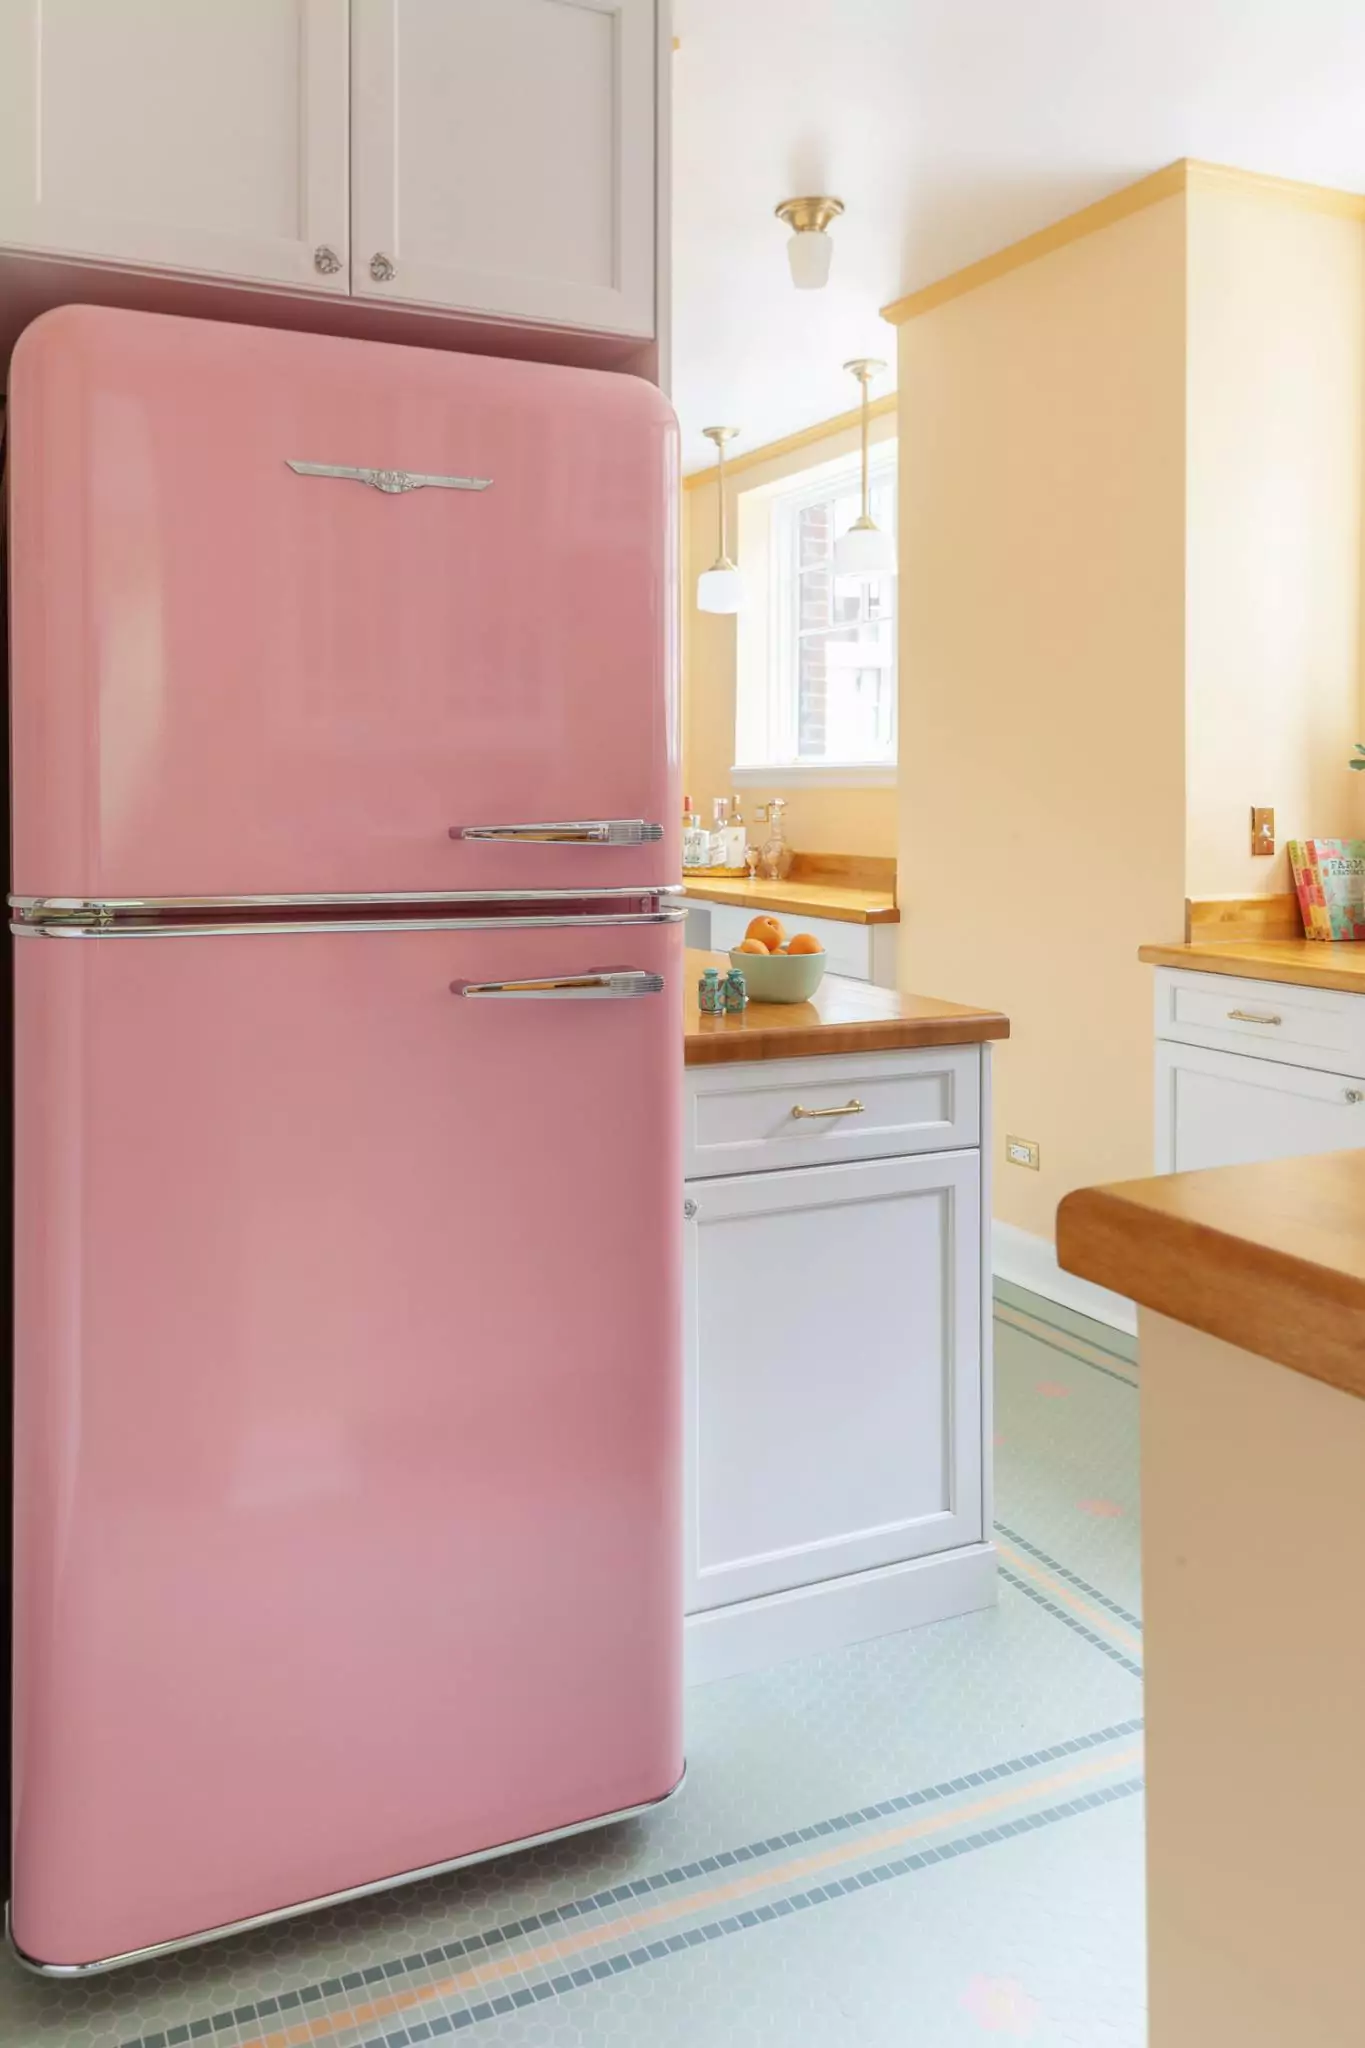 kitchen-renovation-with-pink-refridgerator.jpg